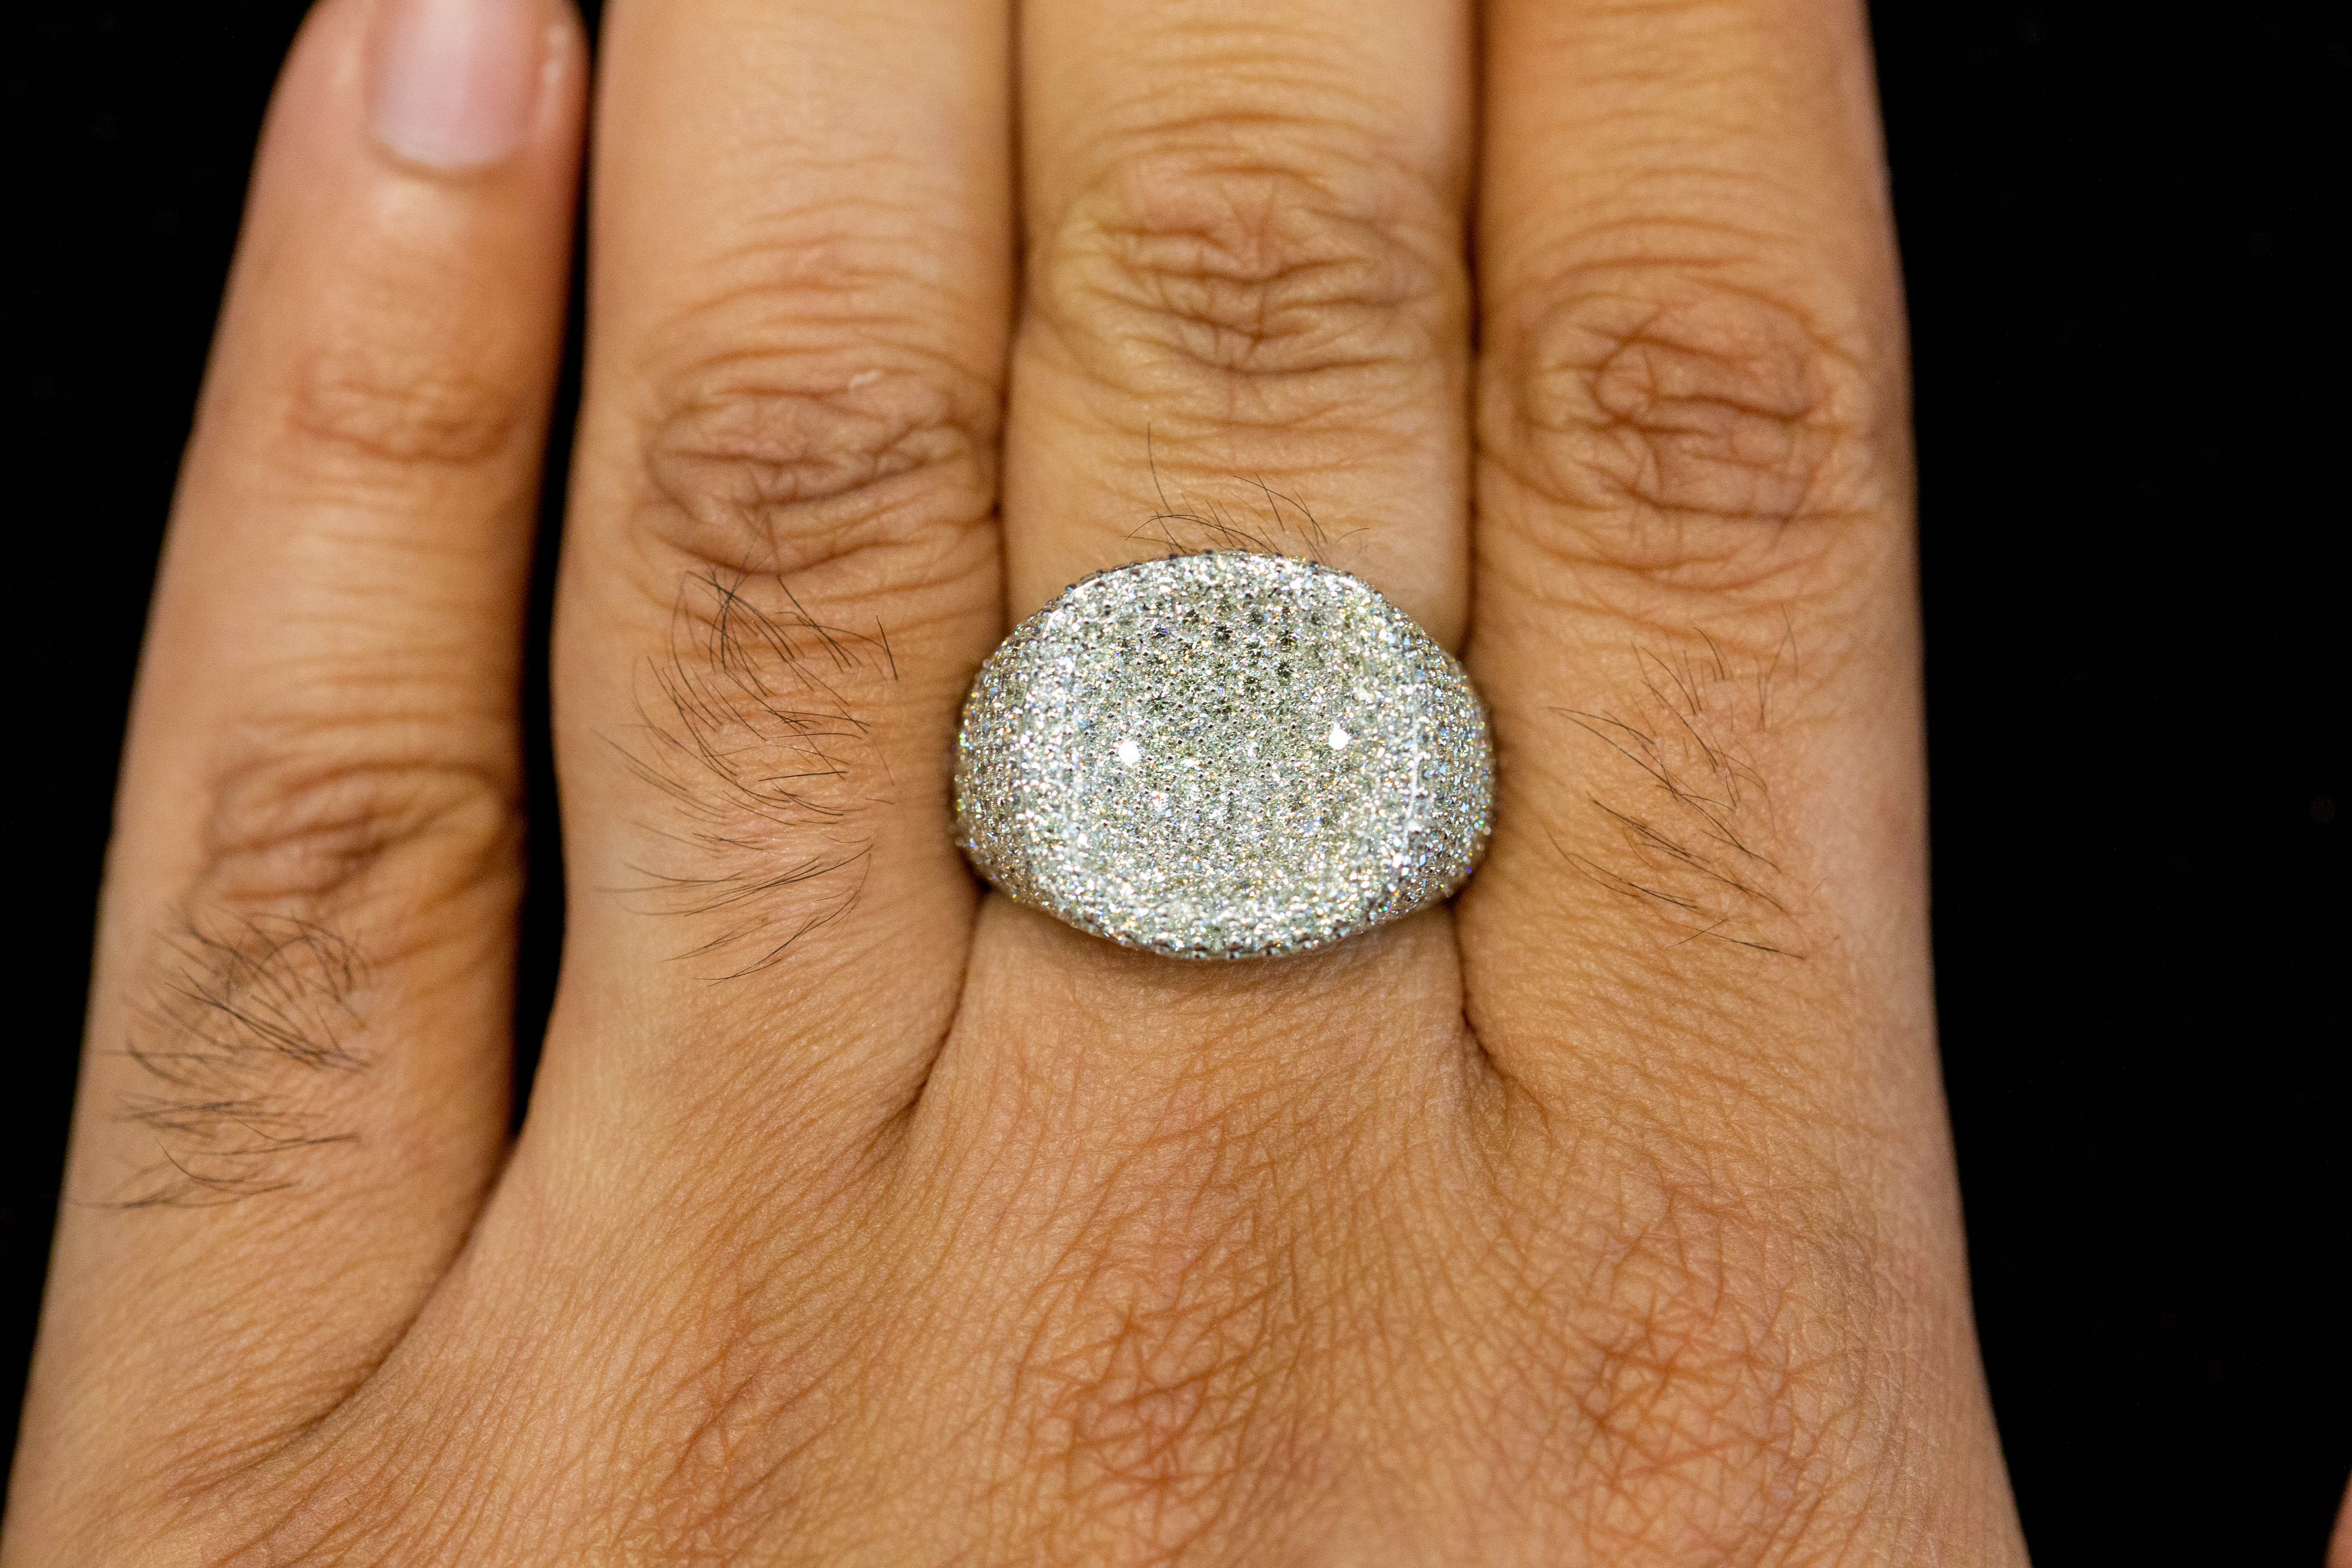 5.00 CT. Diamond Ring 10KT Gold - White Carat - USA & Canada